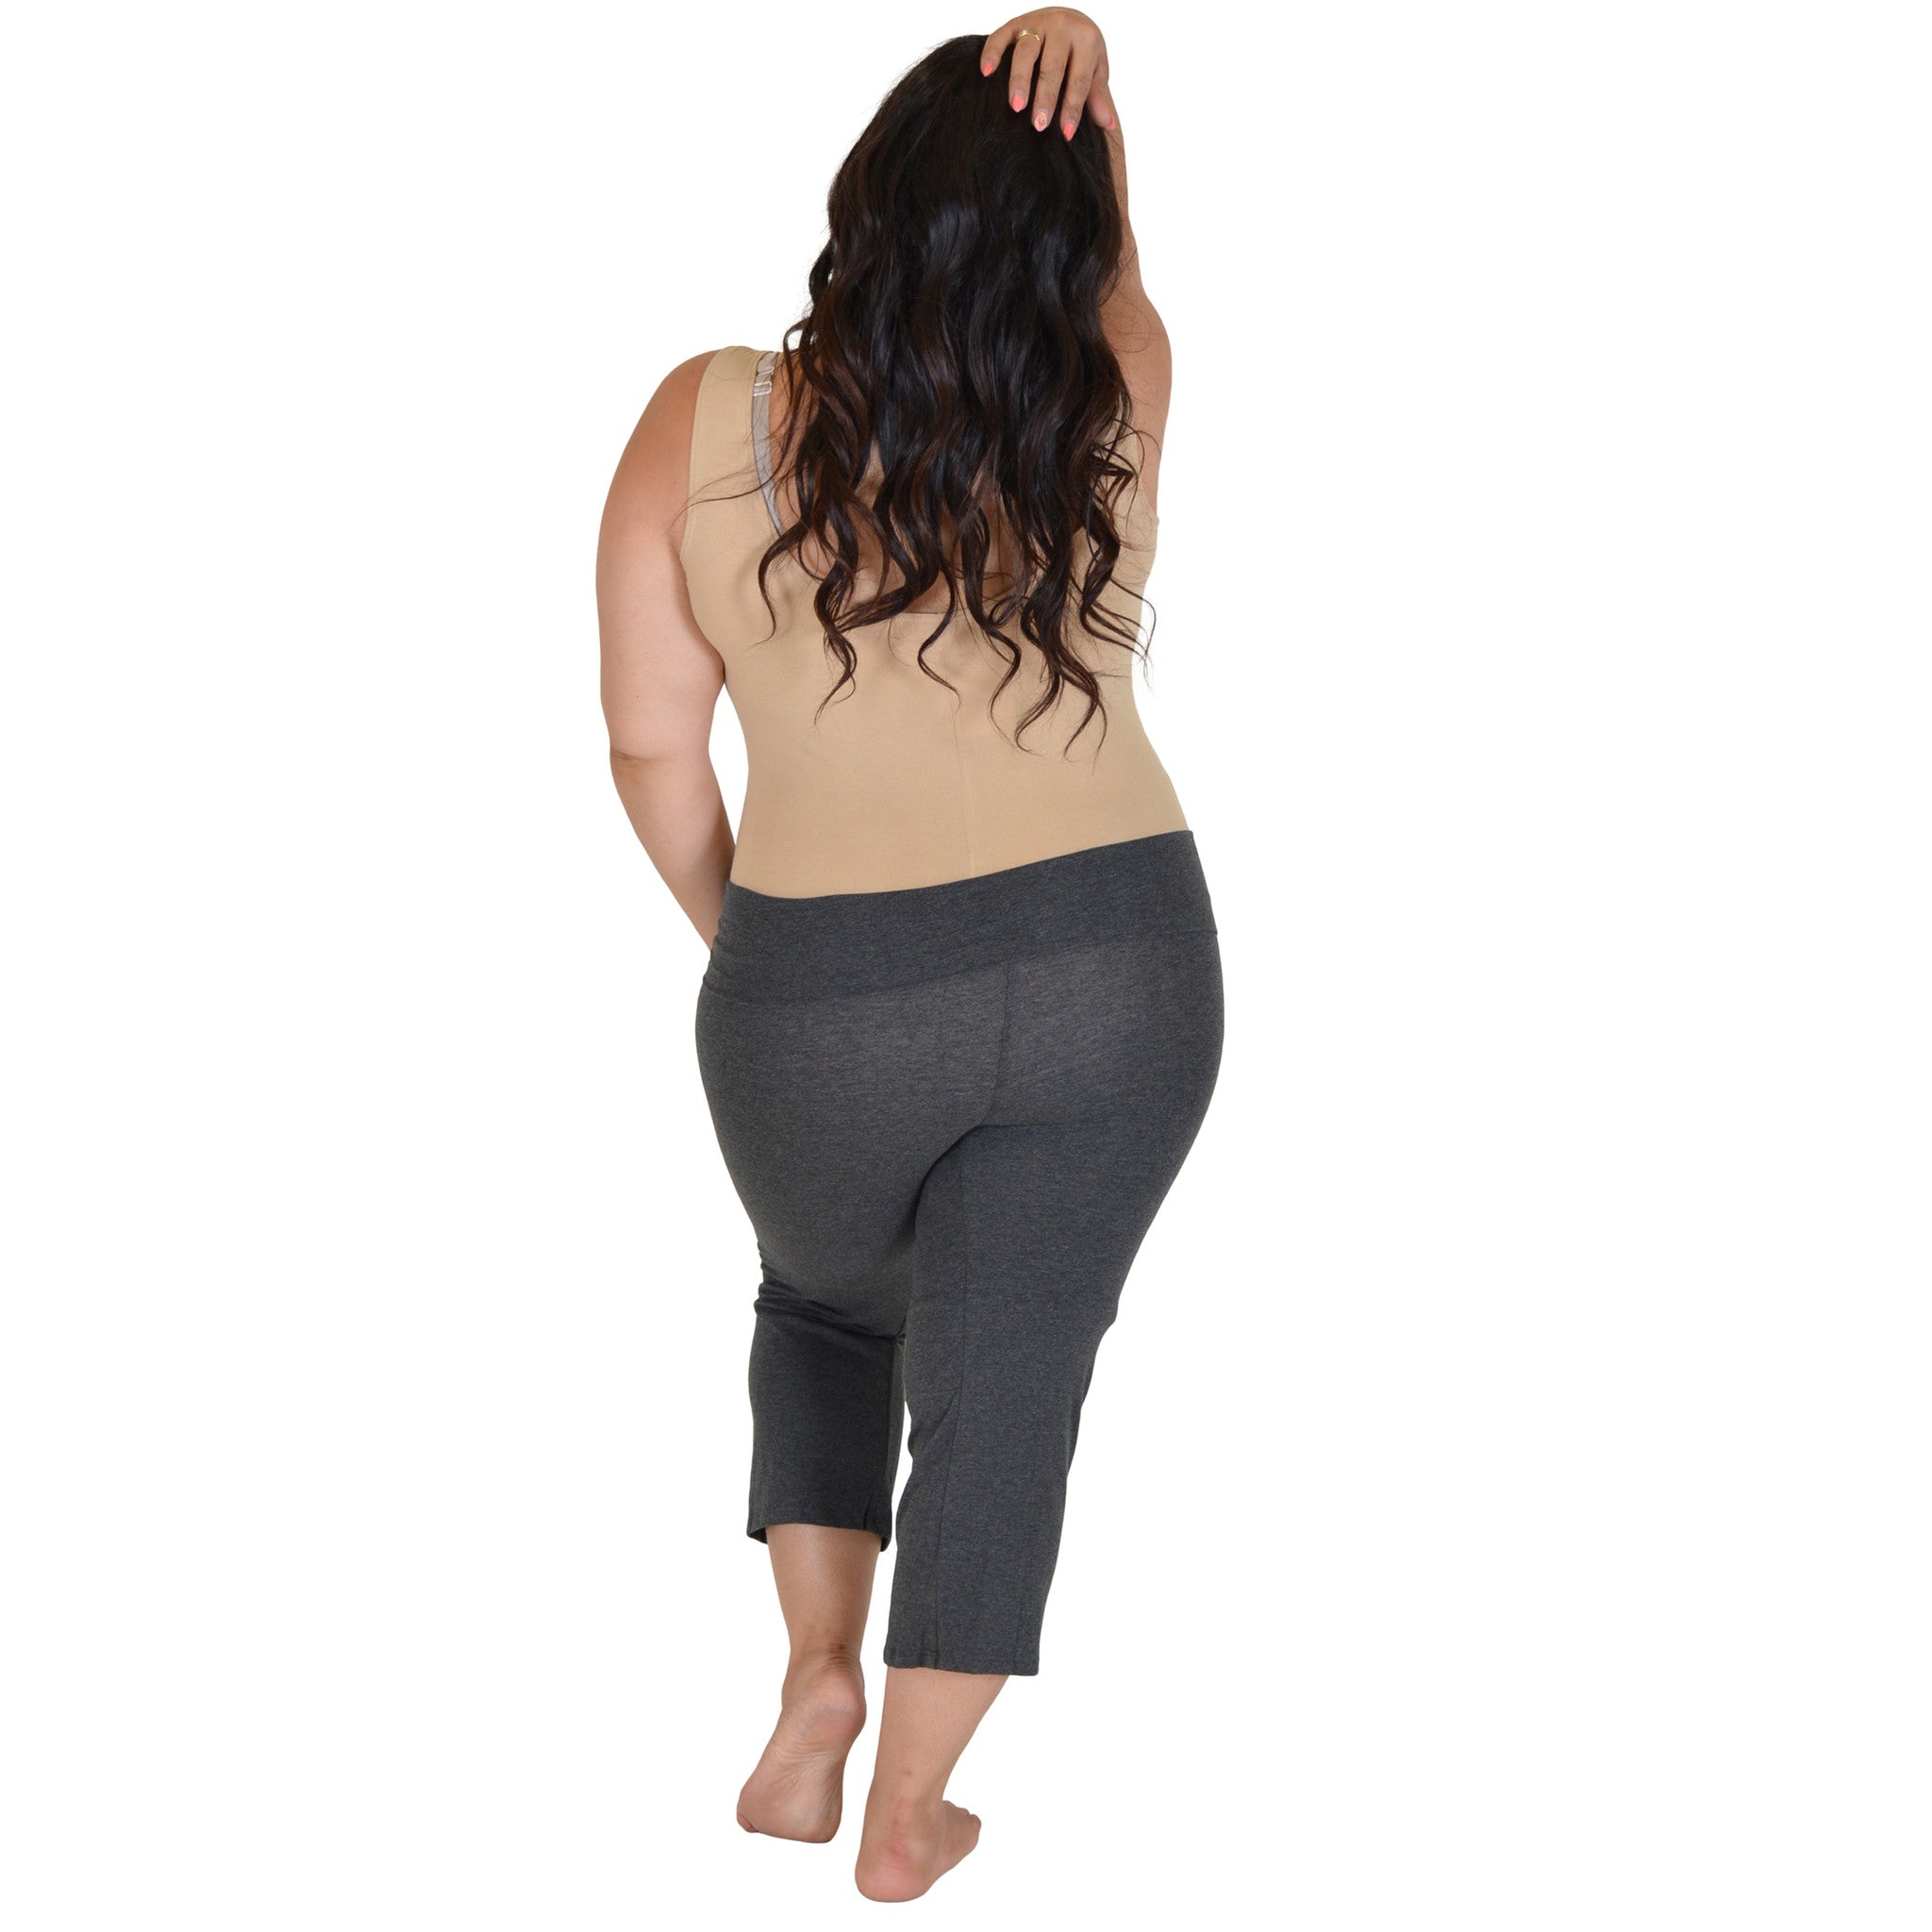 YOHOYOHA Plus Size Leggings High Waist Athletic Workout Yoga Pants Pockets  Women